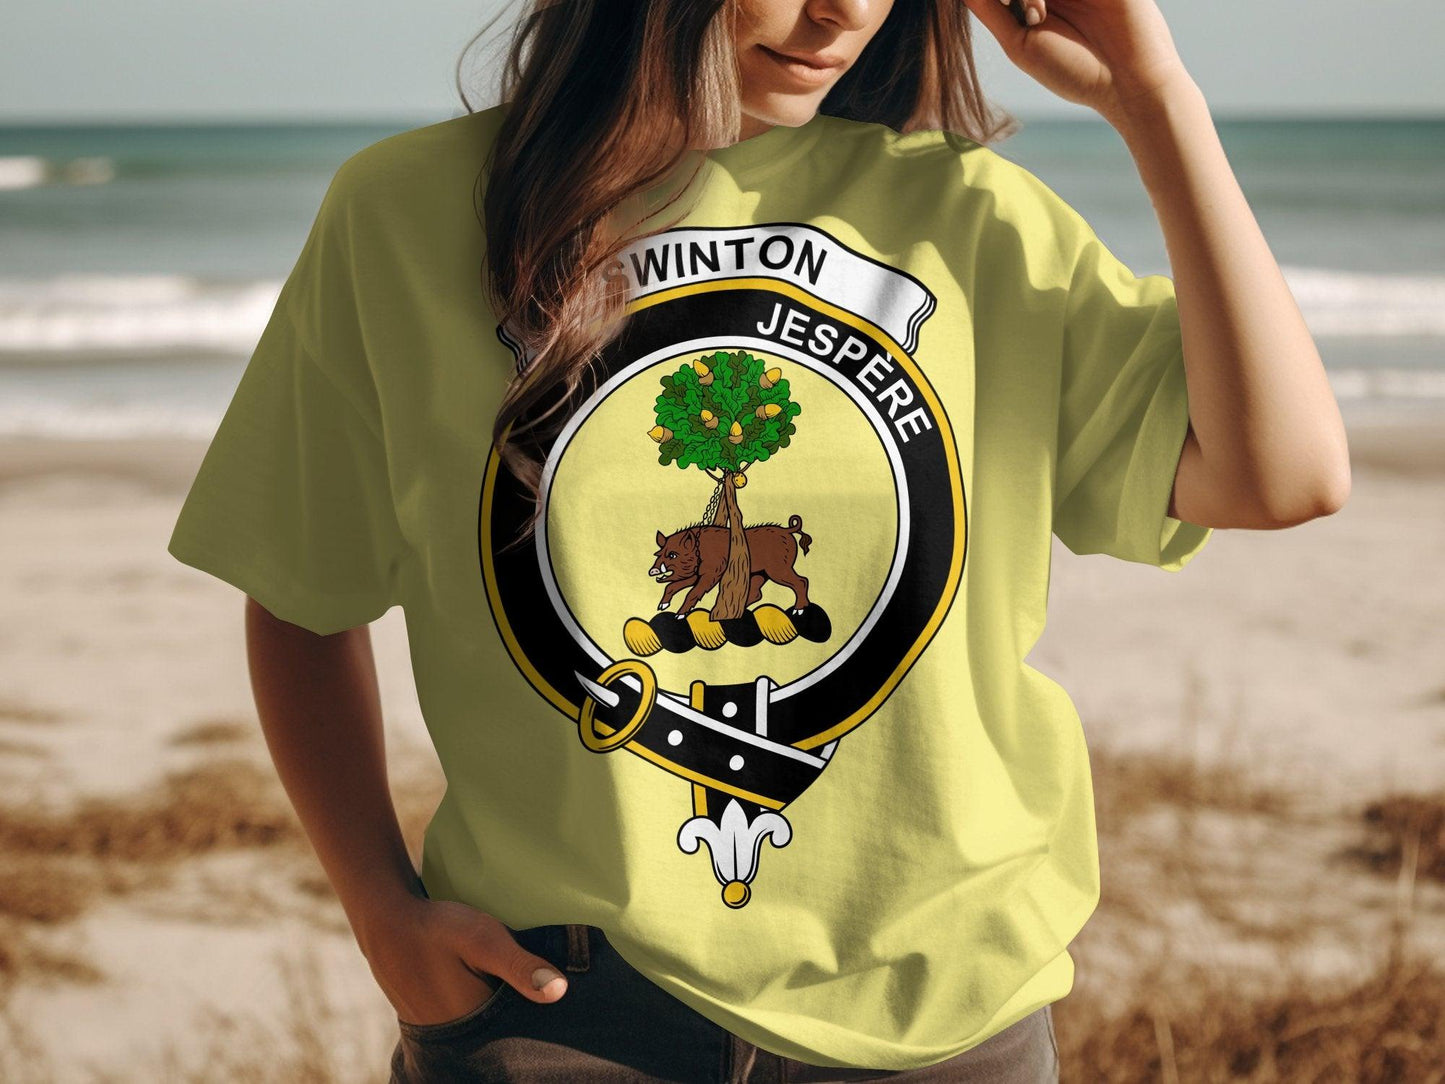 Scottish Clan Crest Swinton Jespere Highland T-Shirt - Living Stone Gifts